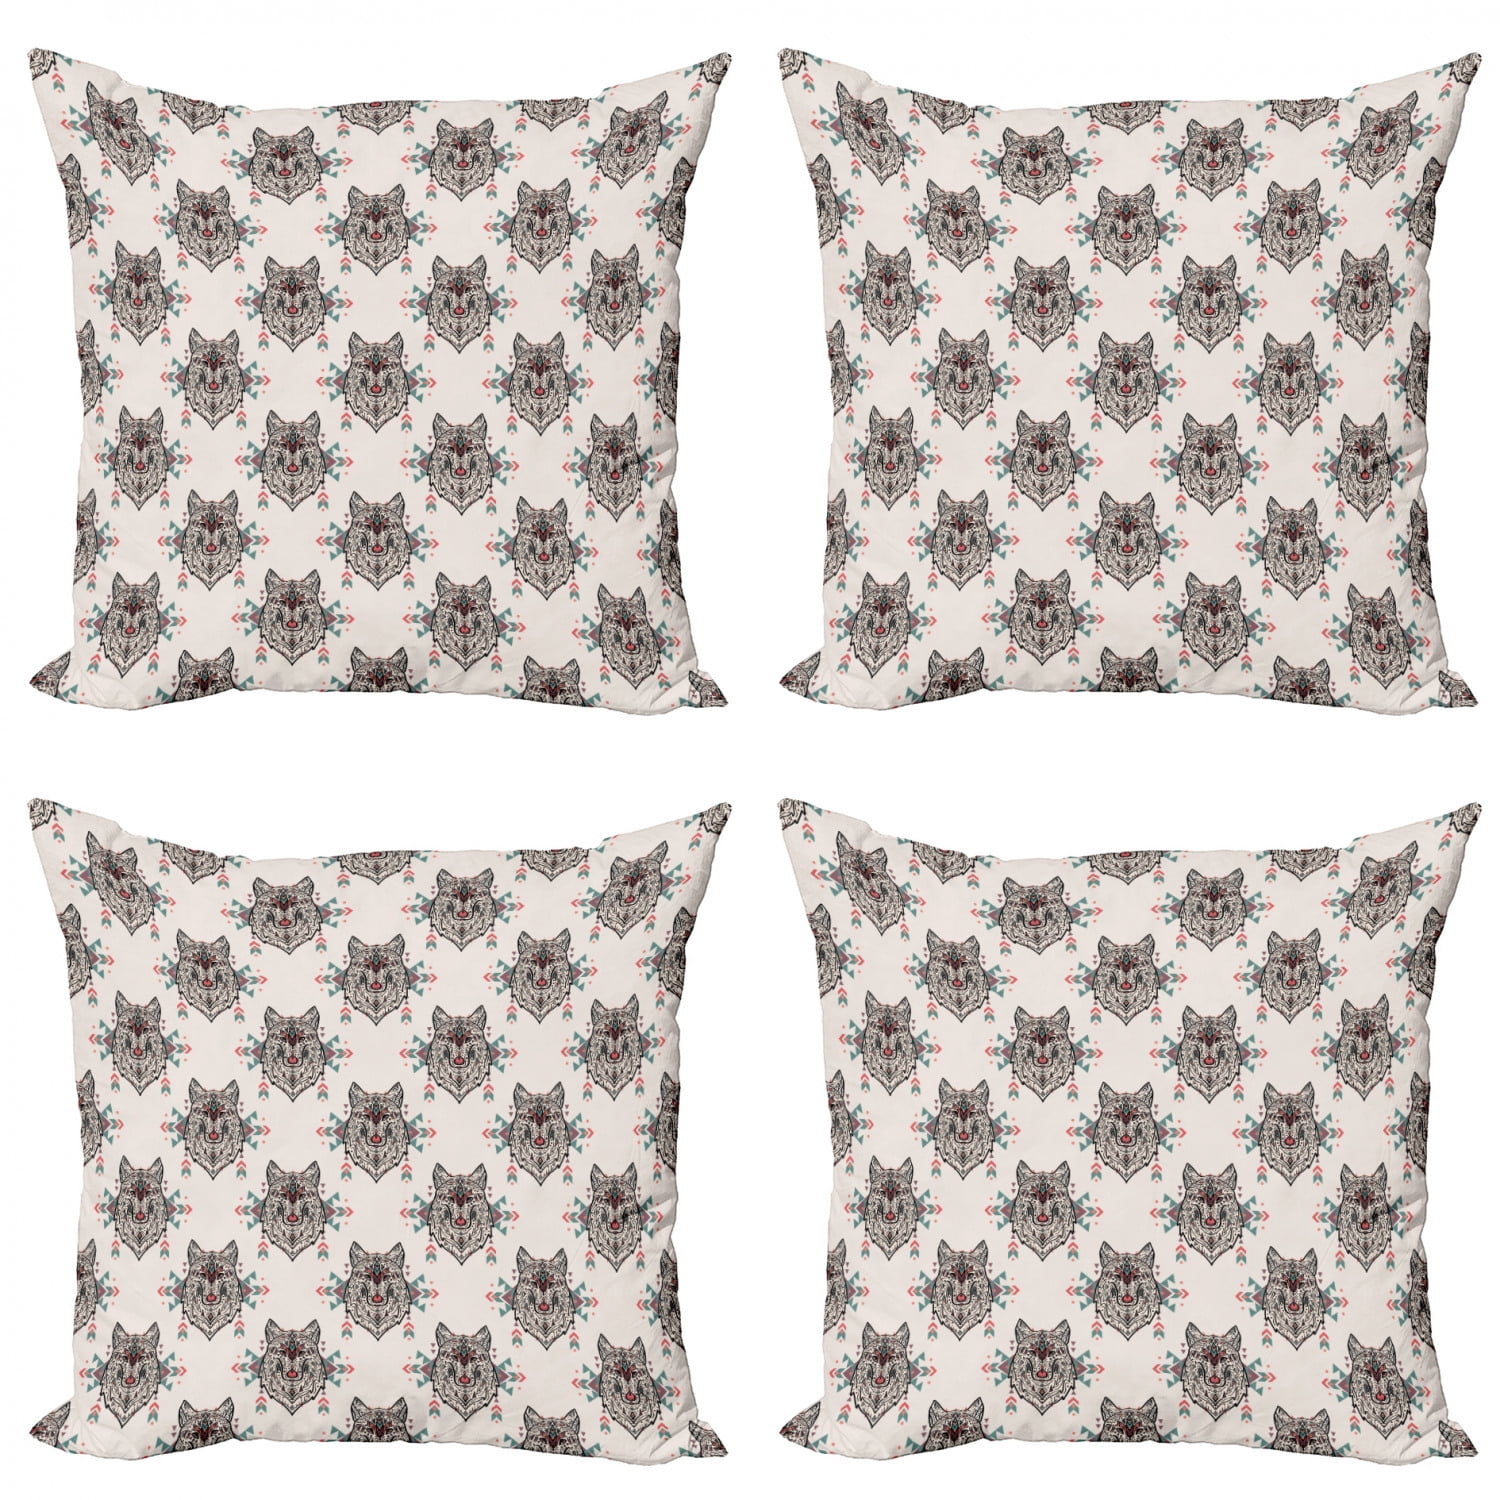 18'' Wolf Sofa Pillow Case Cotton Linen Fashion Throw Cushion Cover Home Decor 